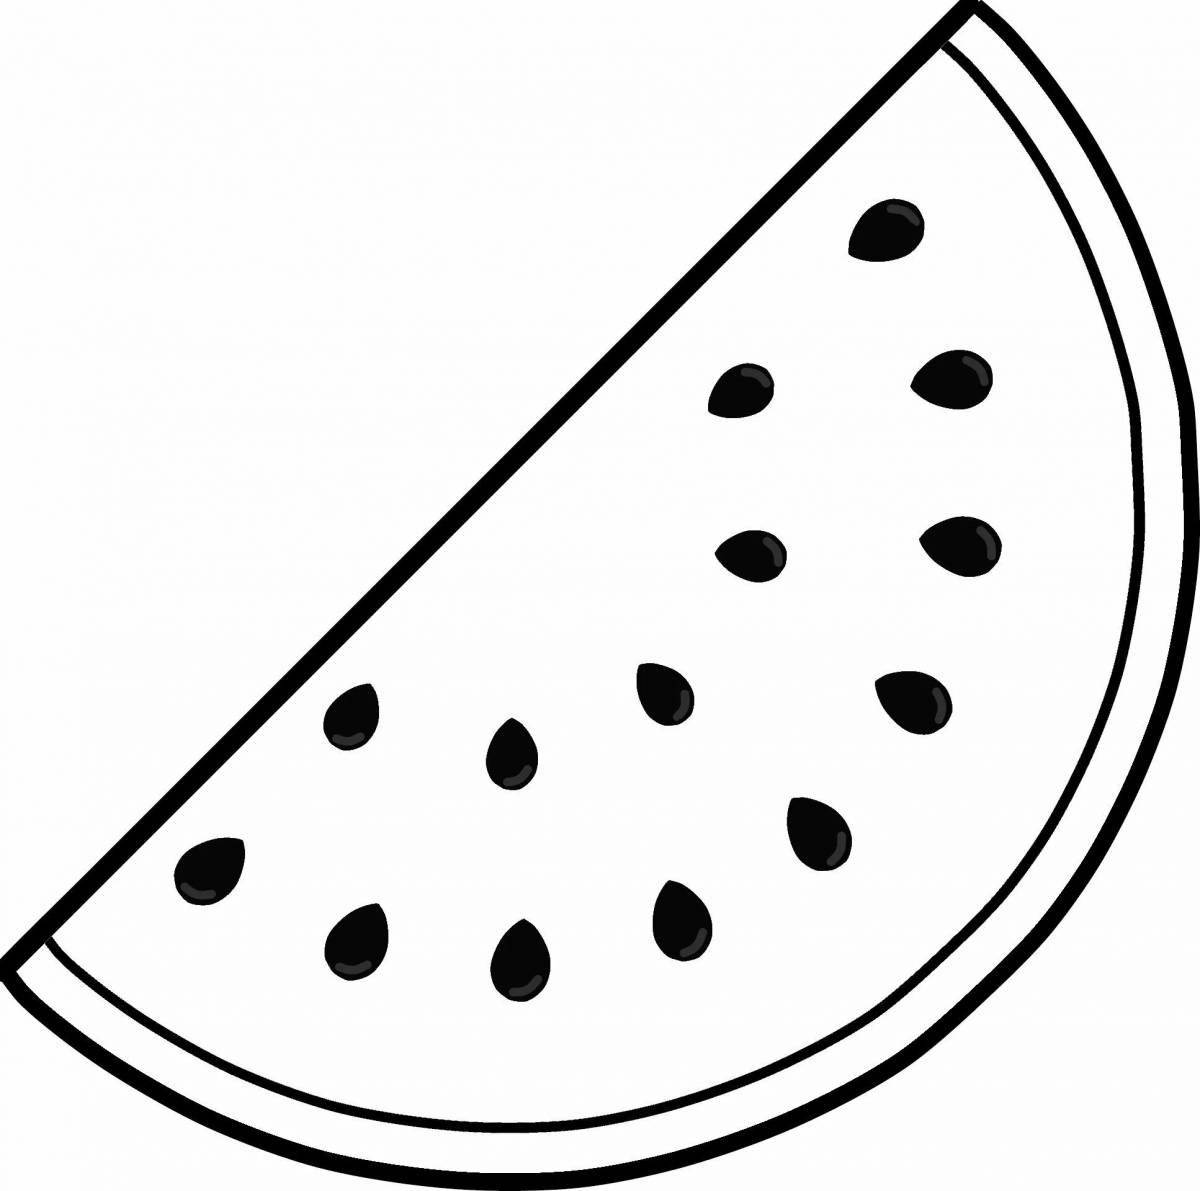 Unique watermelon slice coloring page